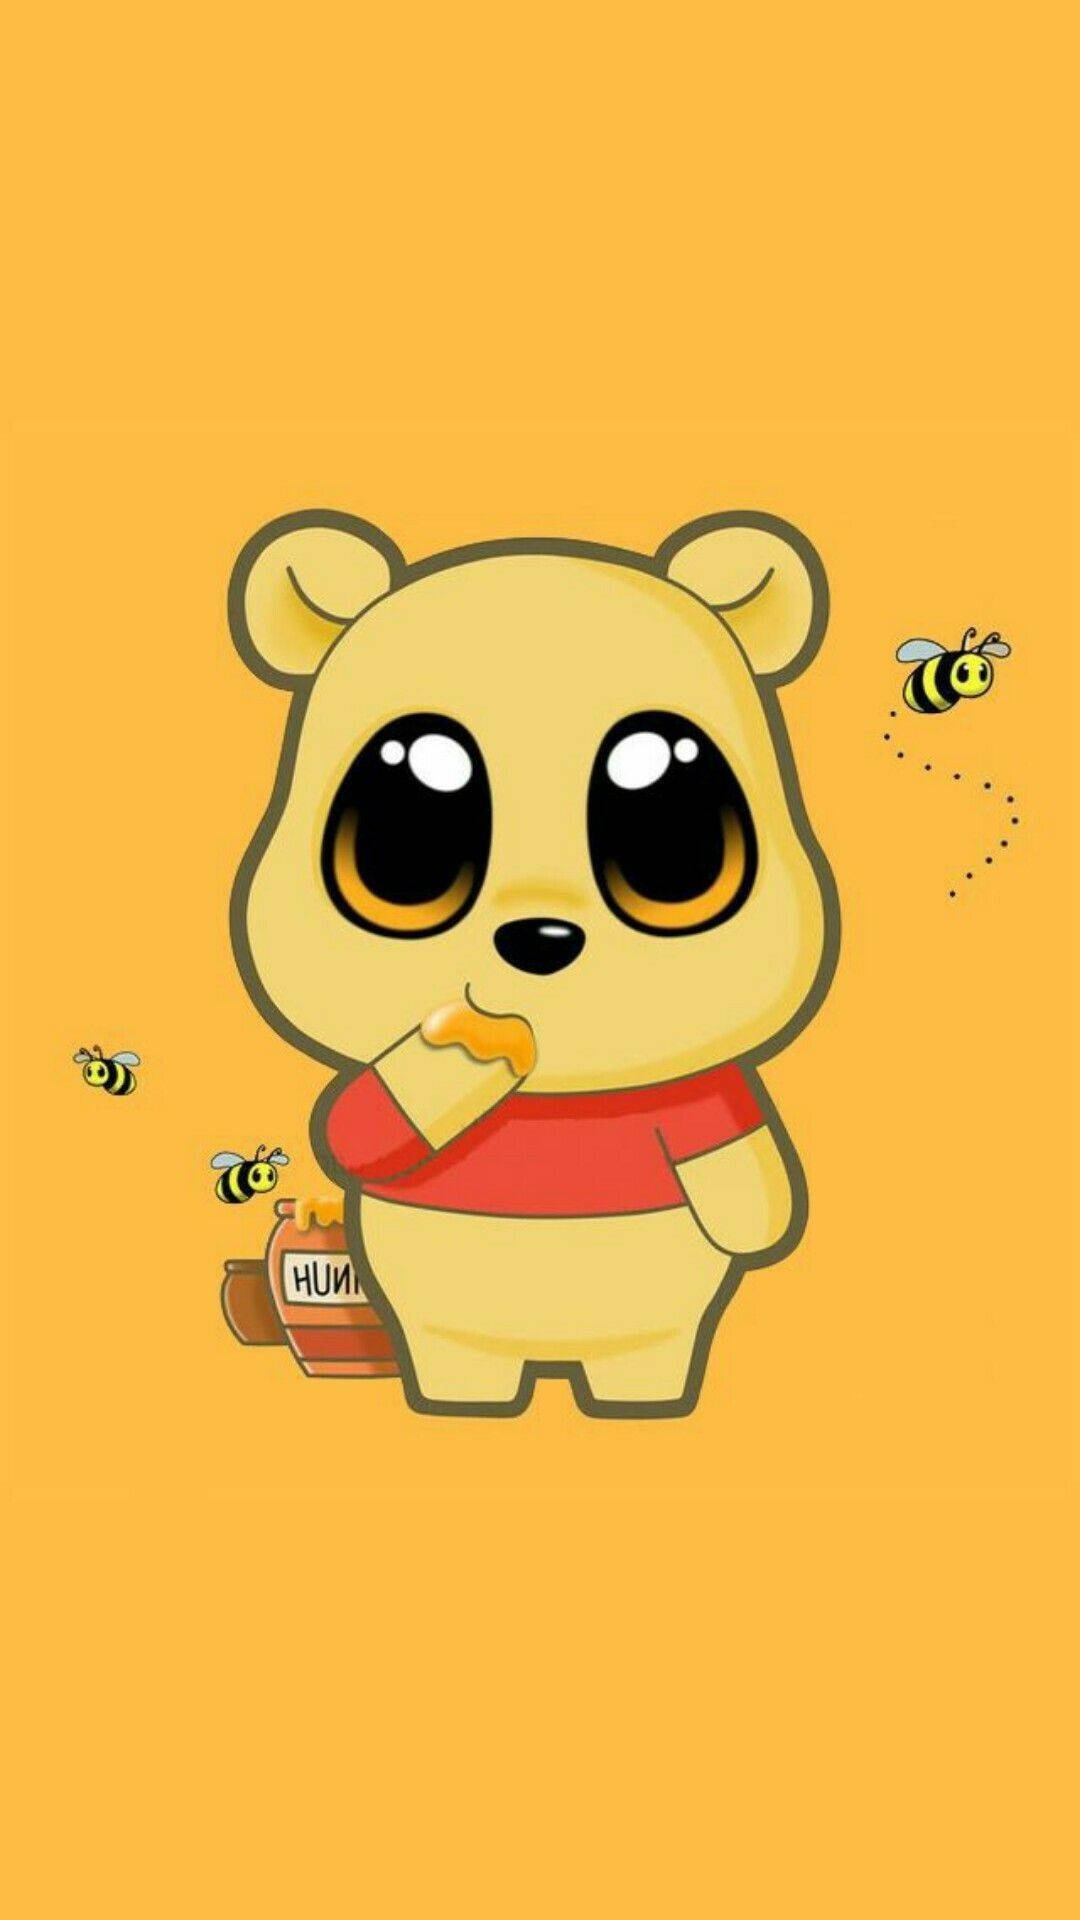 Chibi Cartoon Pooh Eating Honey Wallpaper